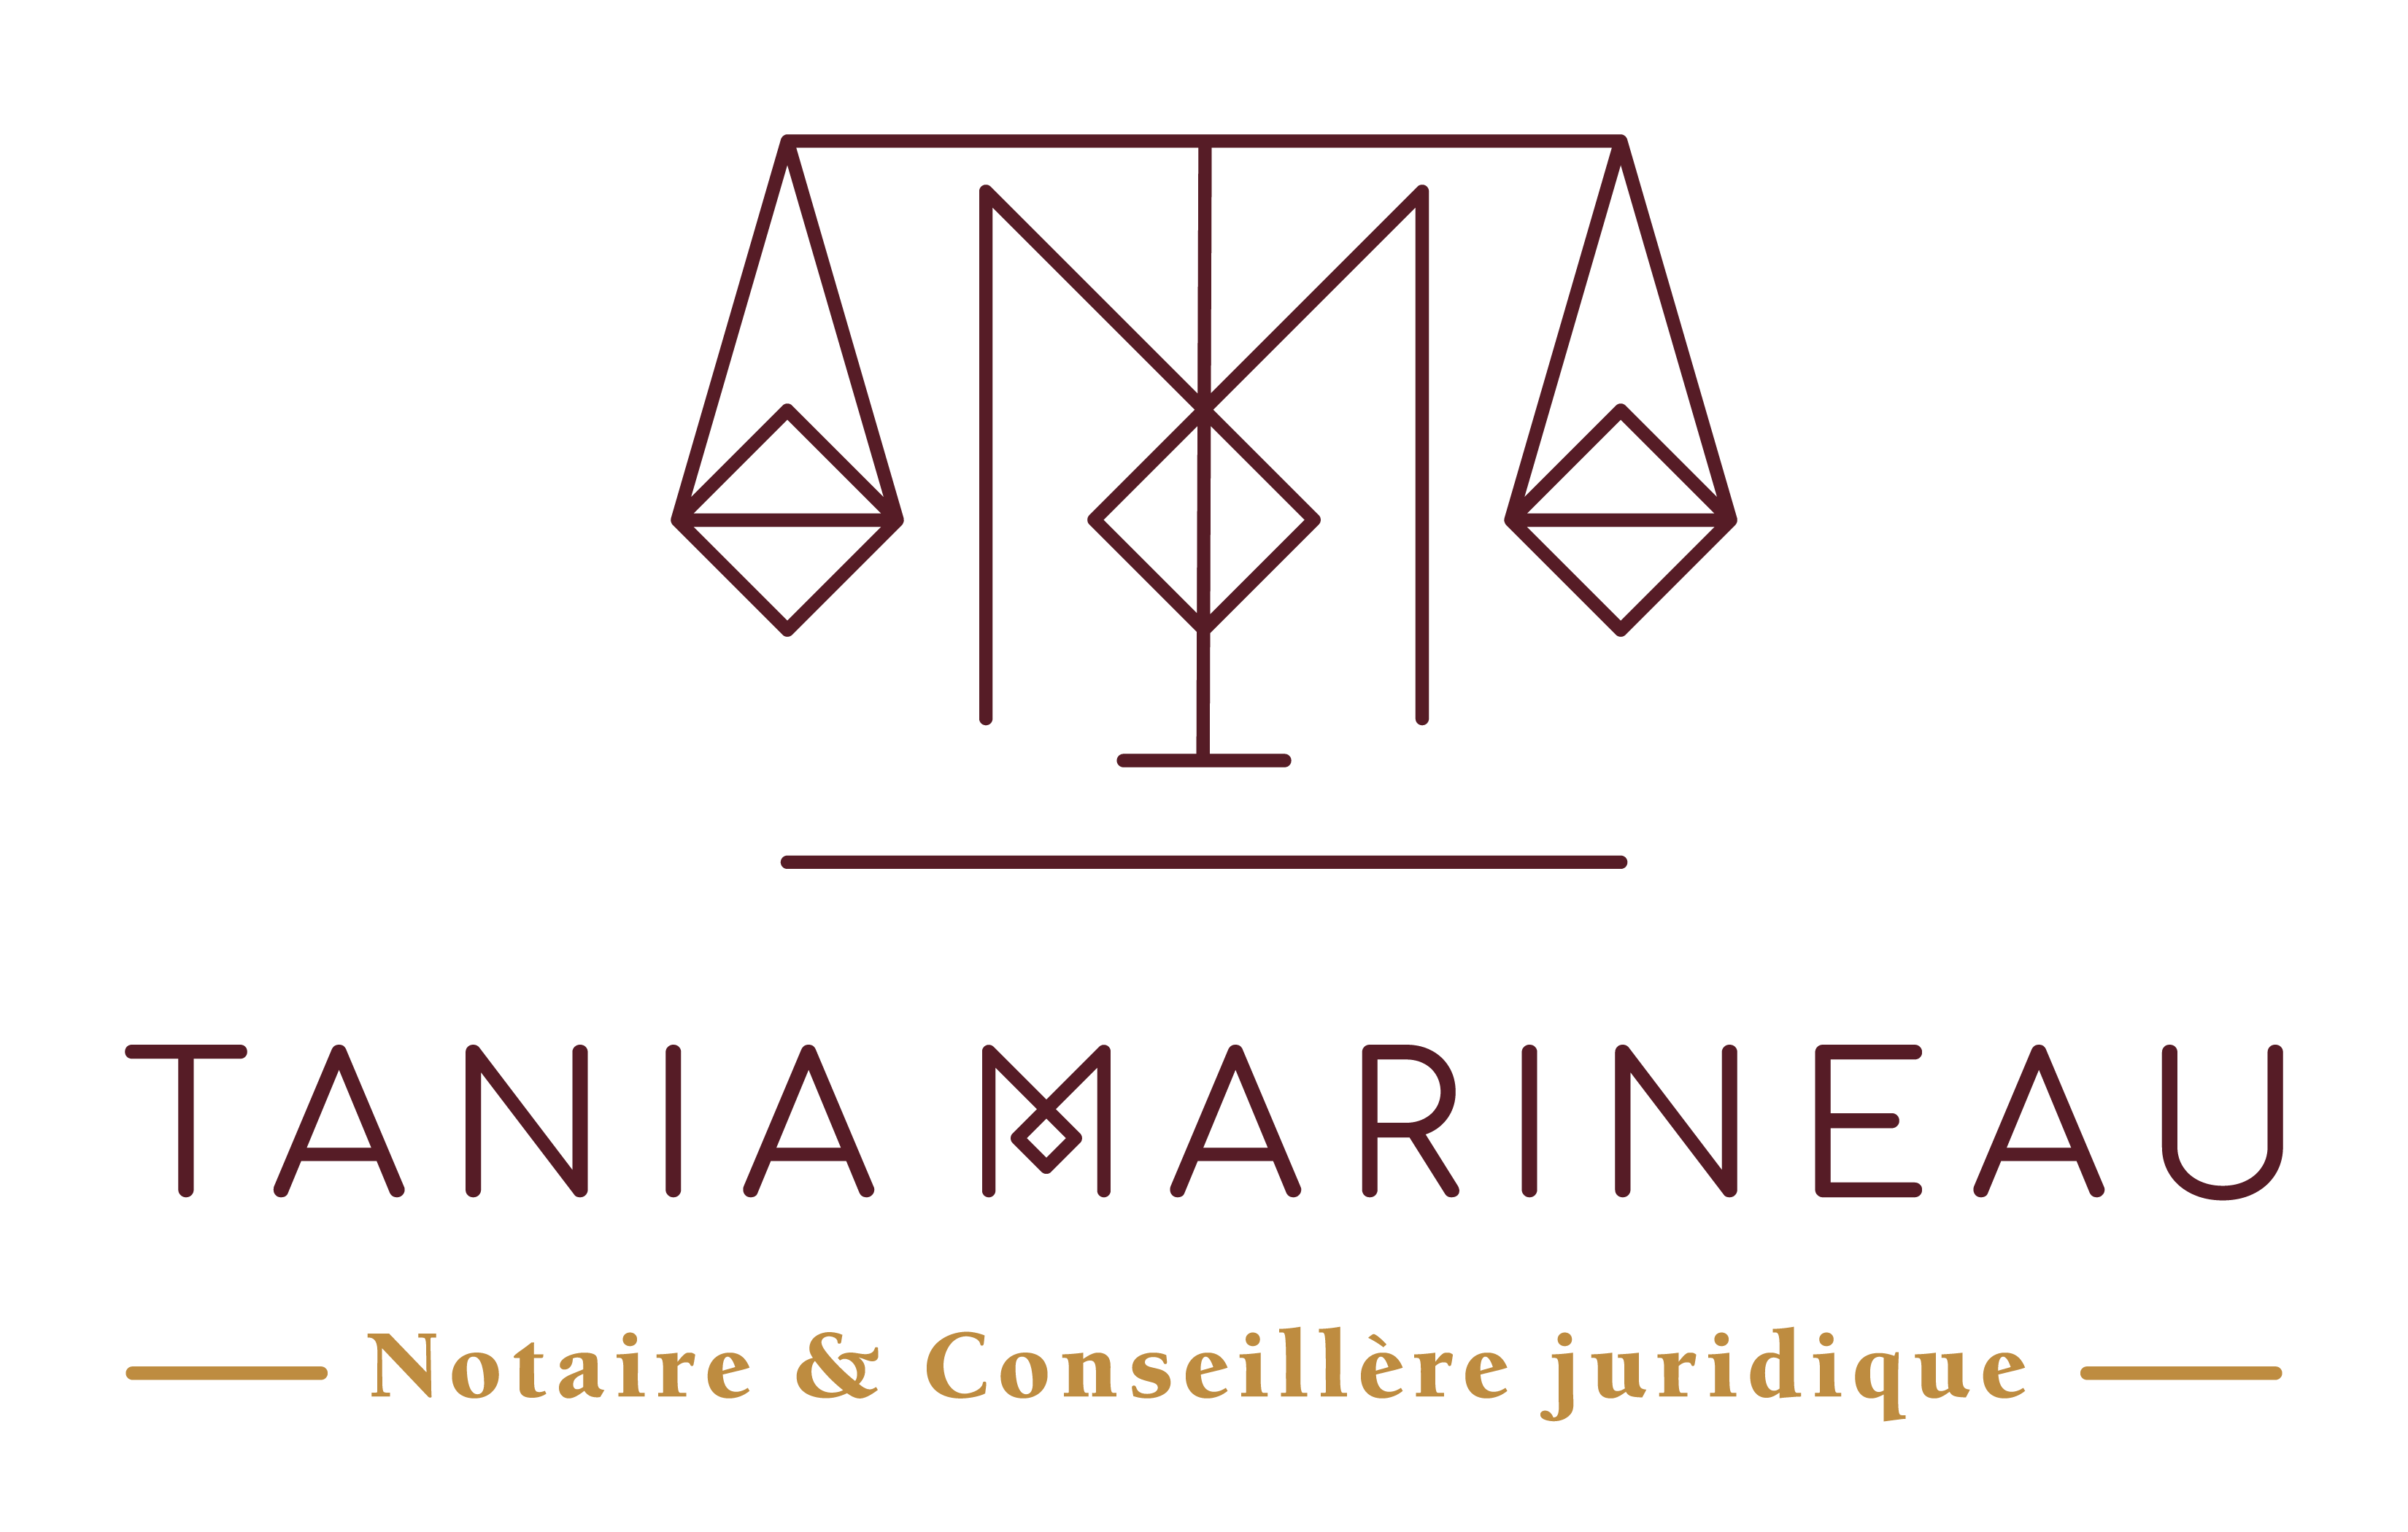 Tania Marineau, Notaire & Conseillère juridique - logo